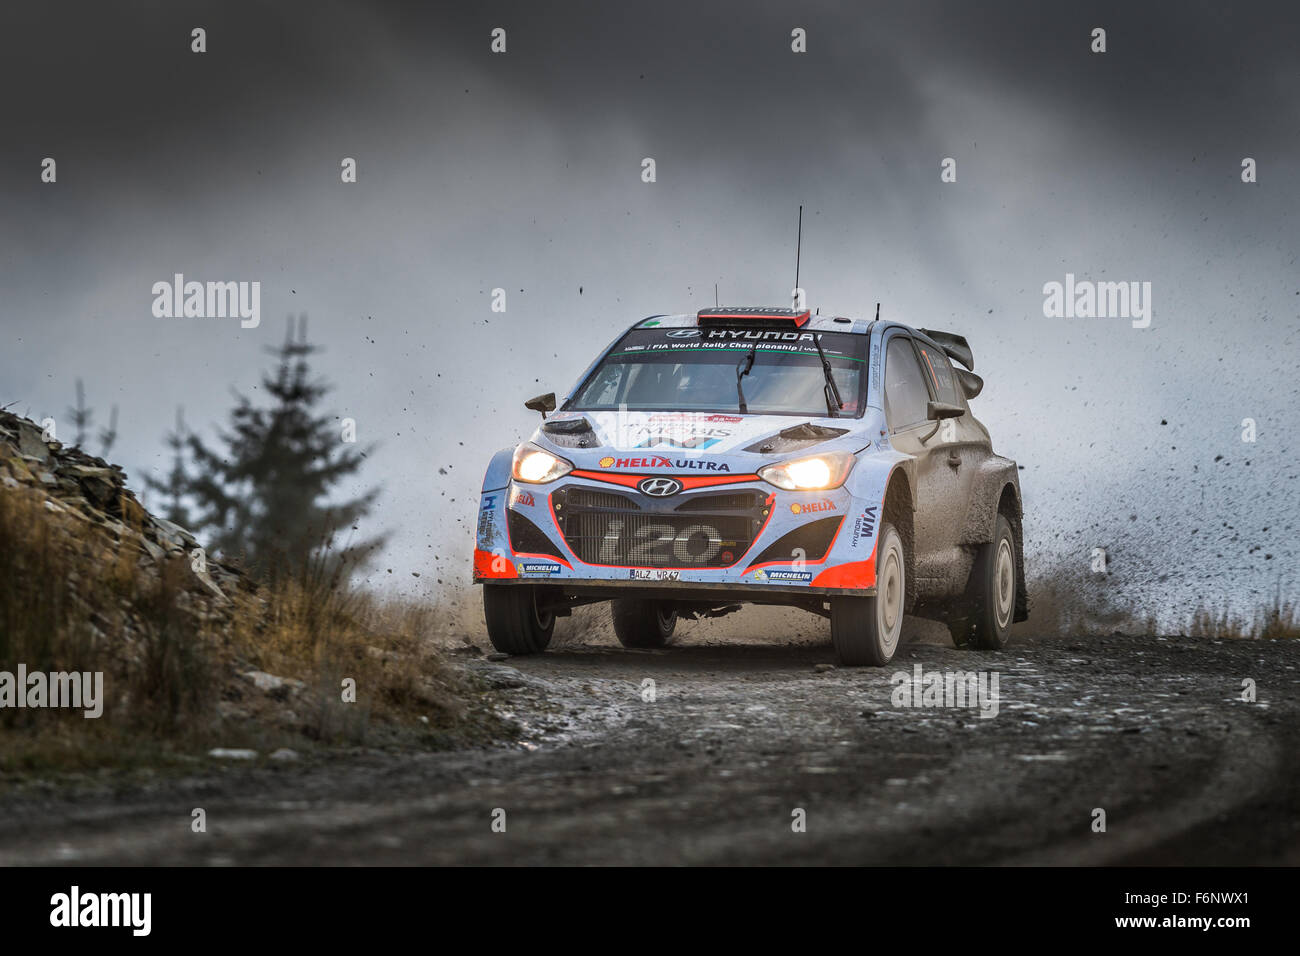 Dani Sordo & Marc Marti, SS6 Myherin, Wales Rally GB 2015, WRC. 07 Hyundai Motorsport, Hyundai i20 WRC, Action Stock Photo